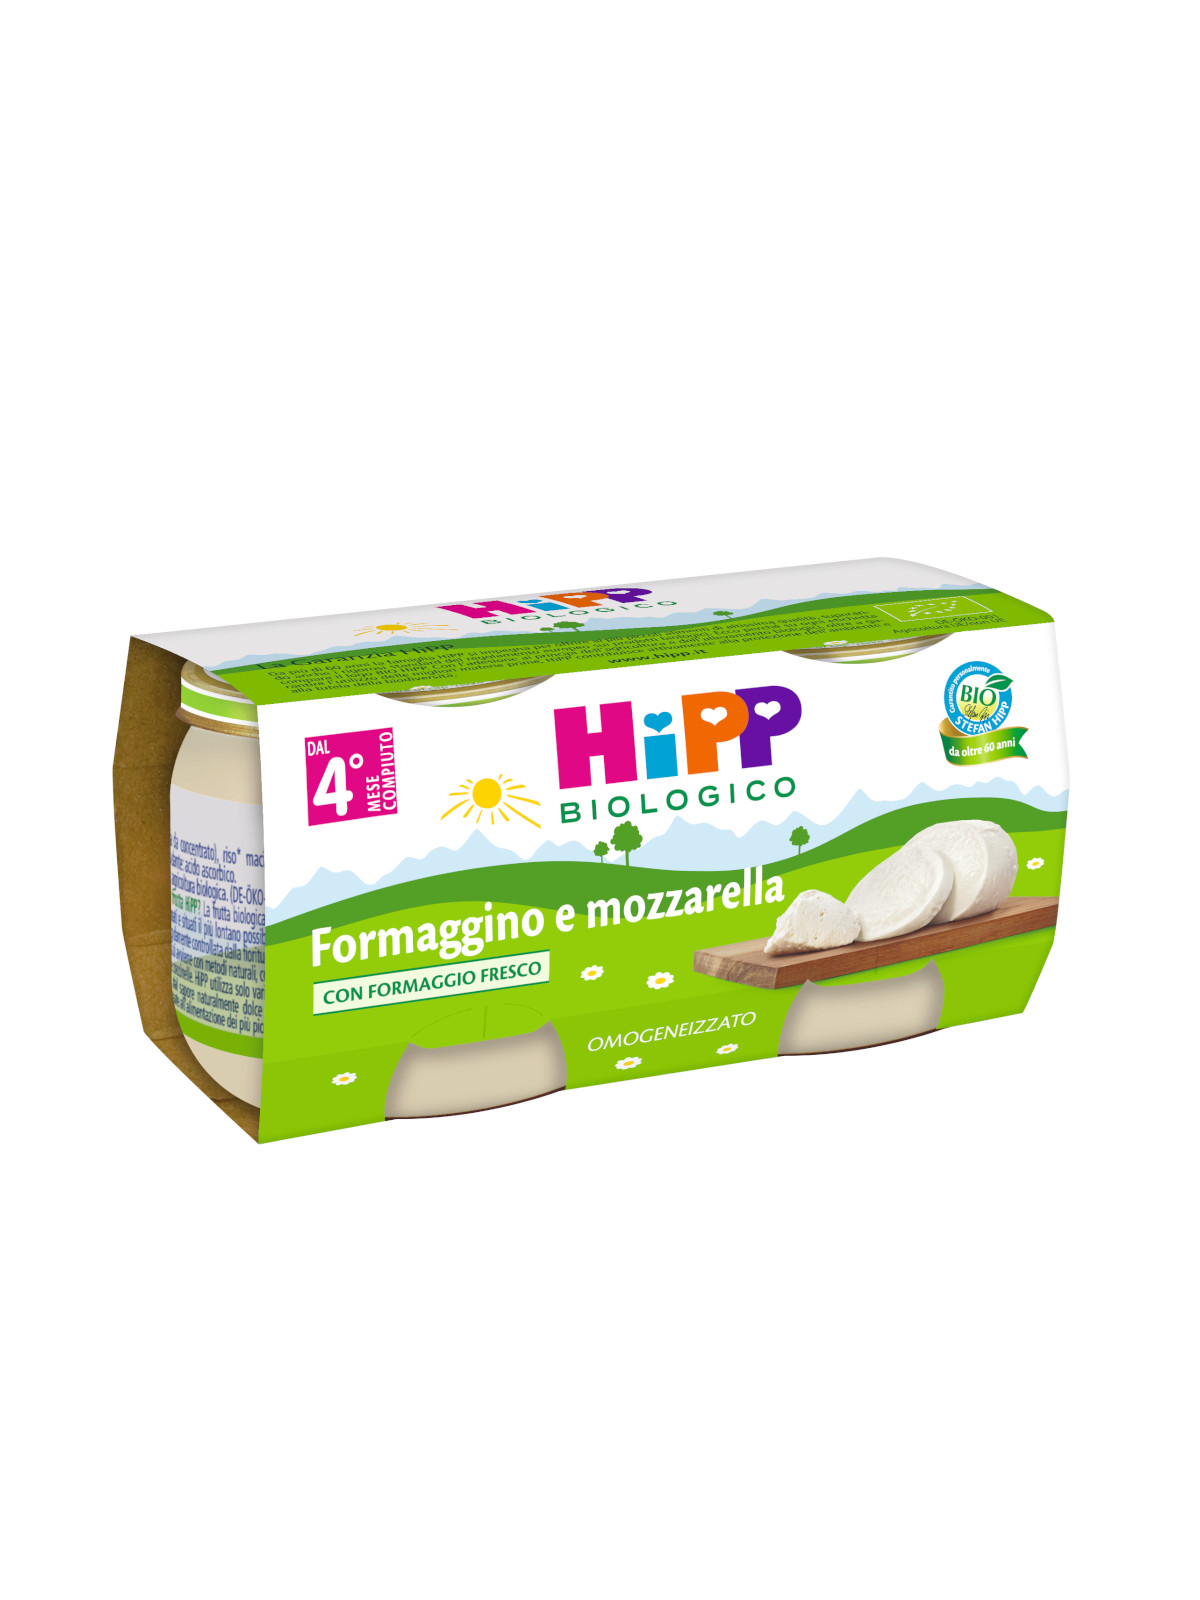 Hipp - omogeneizzato formaggino e mozzarella 2x80g - Hipp